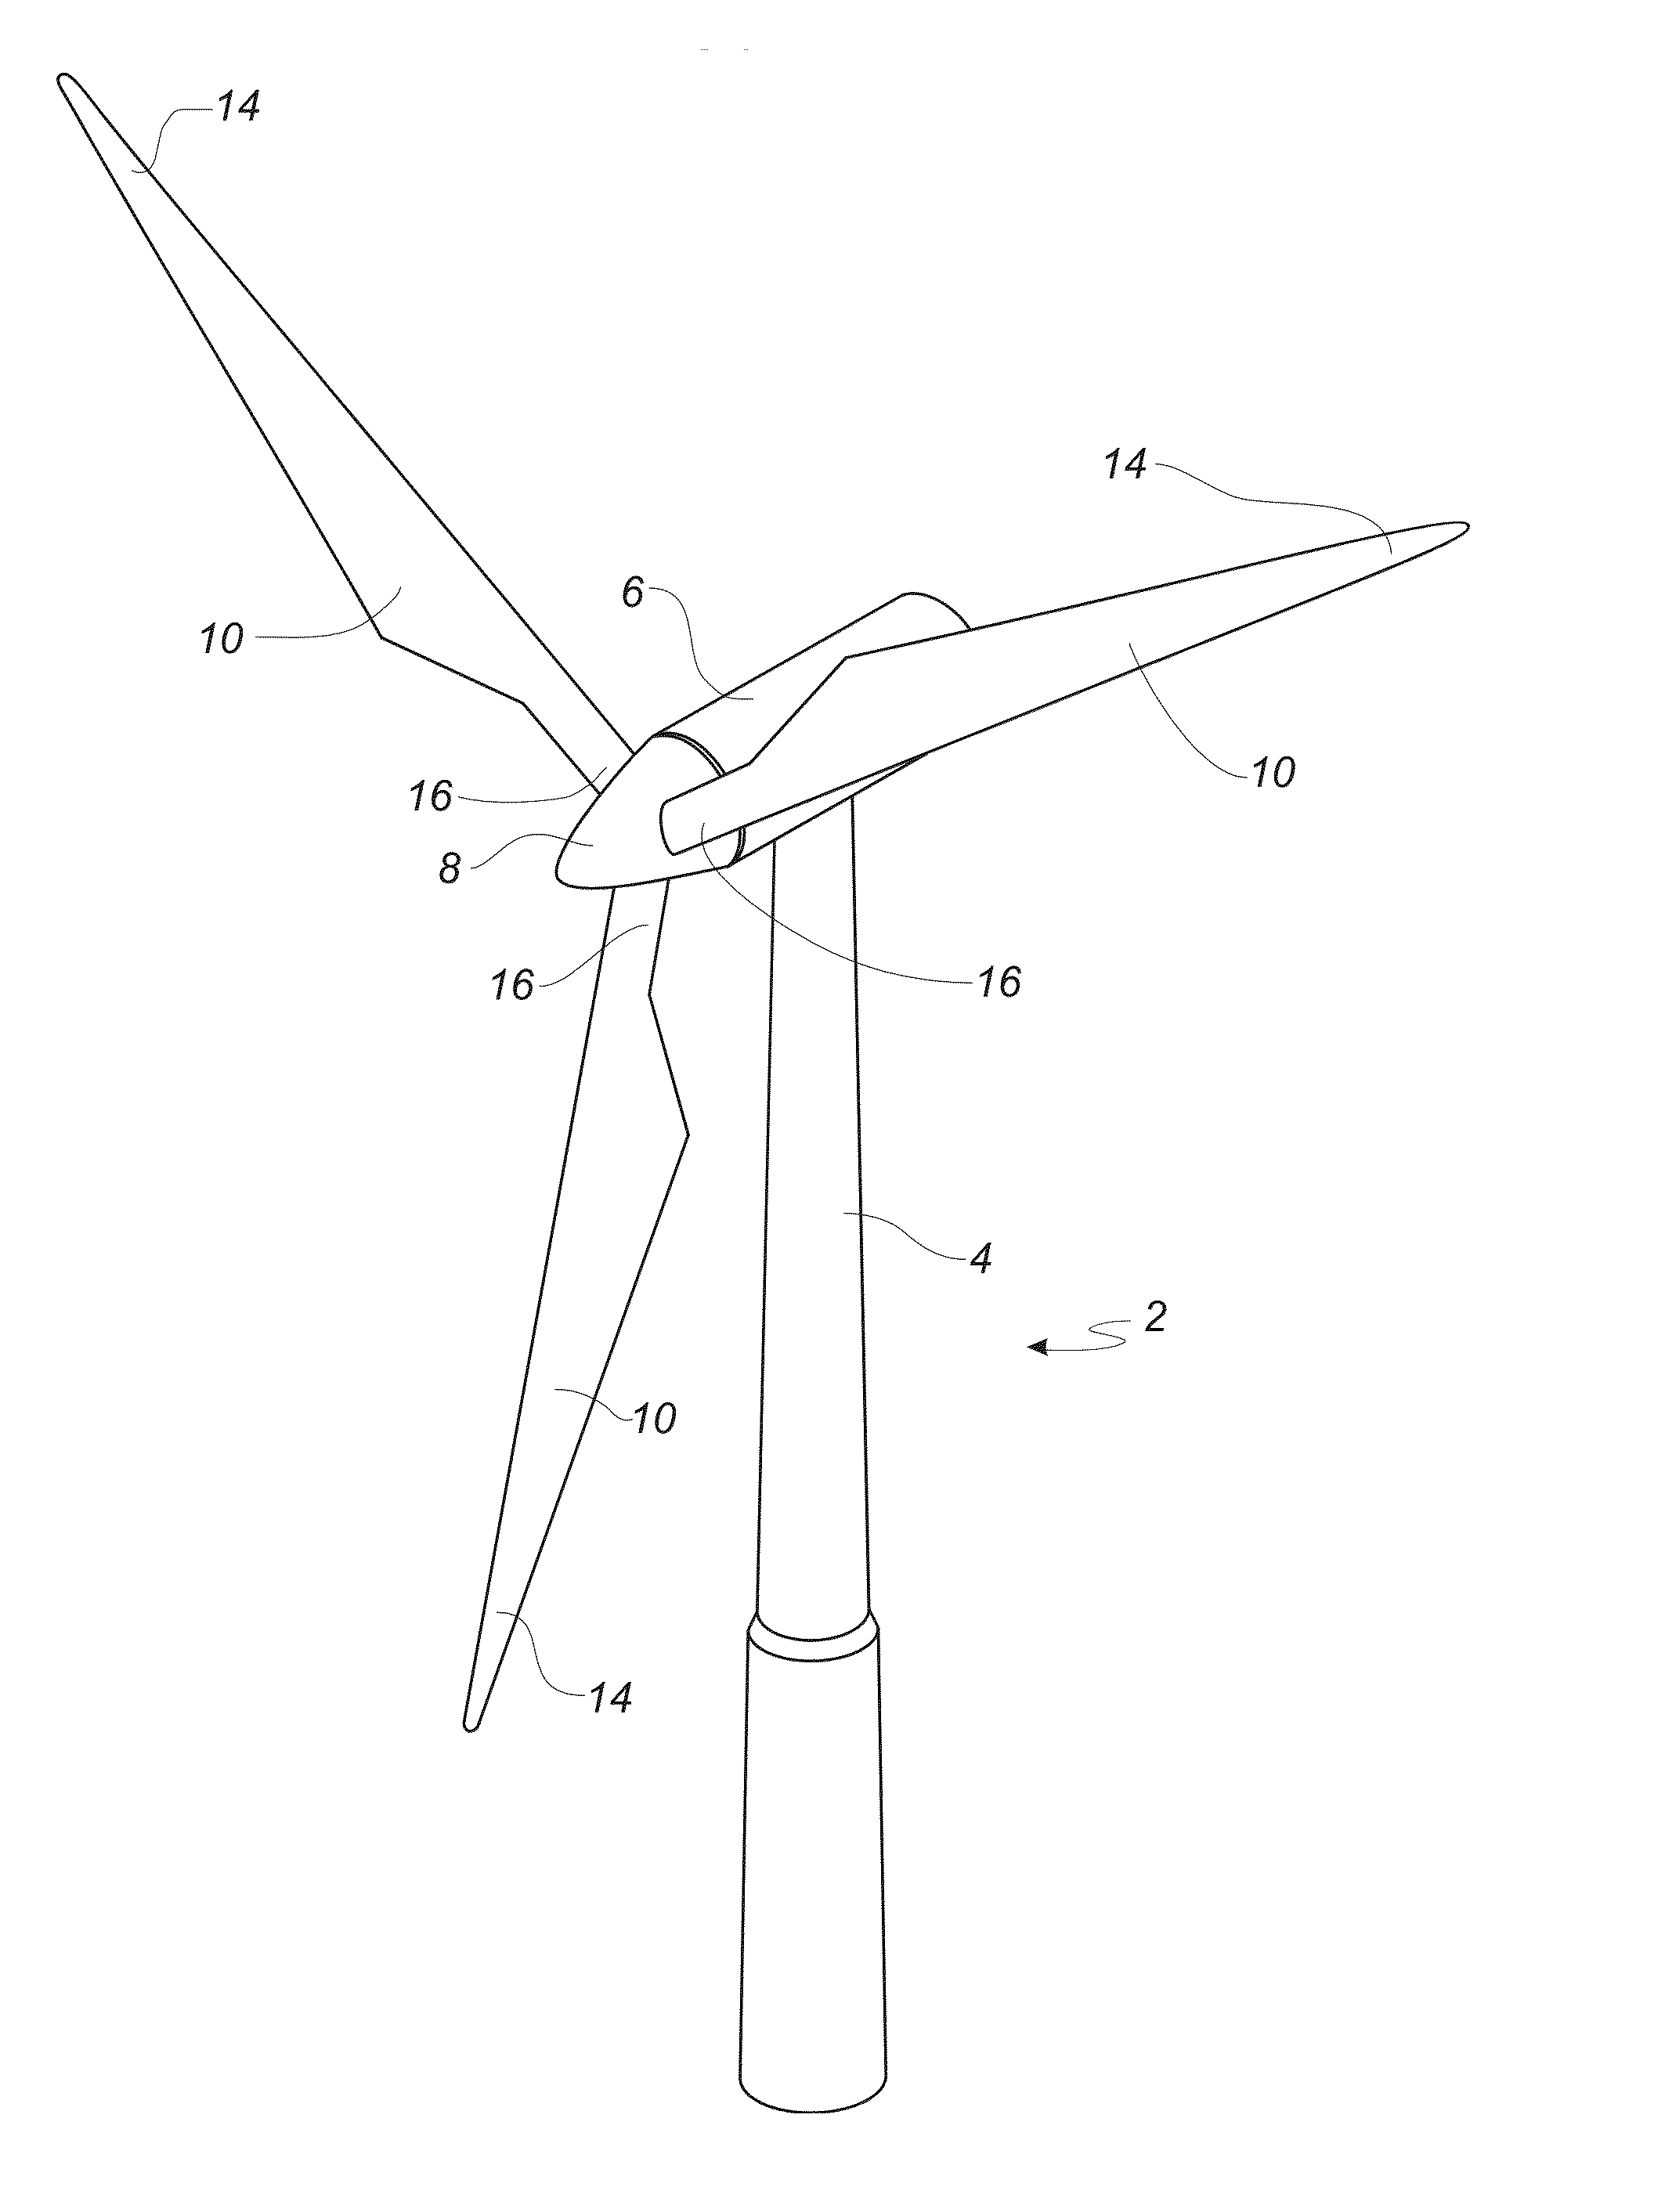 Wind turbine blade having a bond line adjacent a sandwich panel of the blade